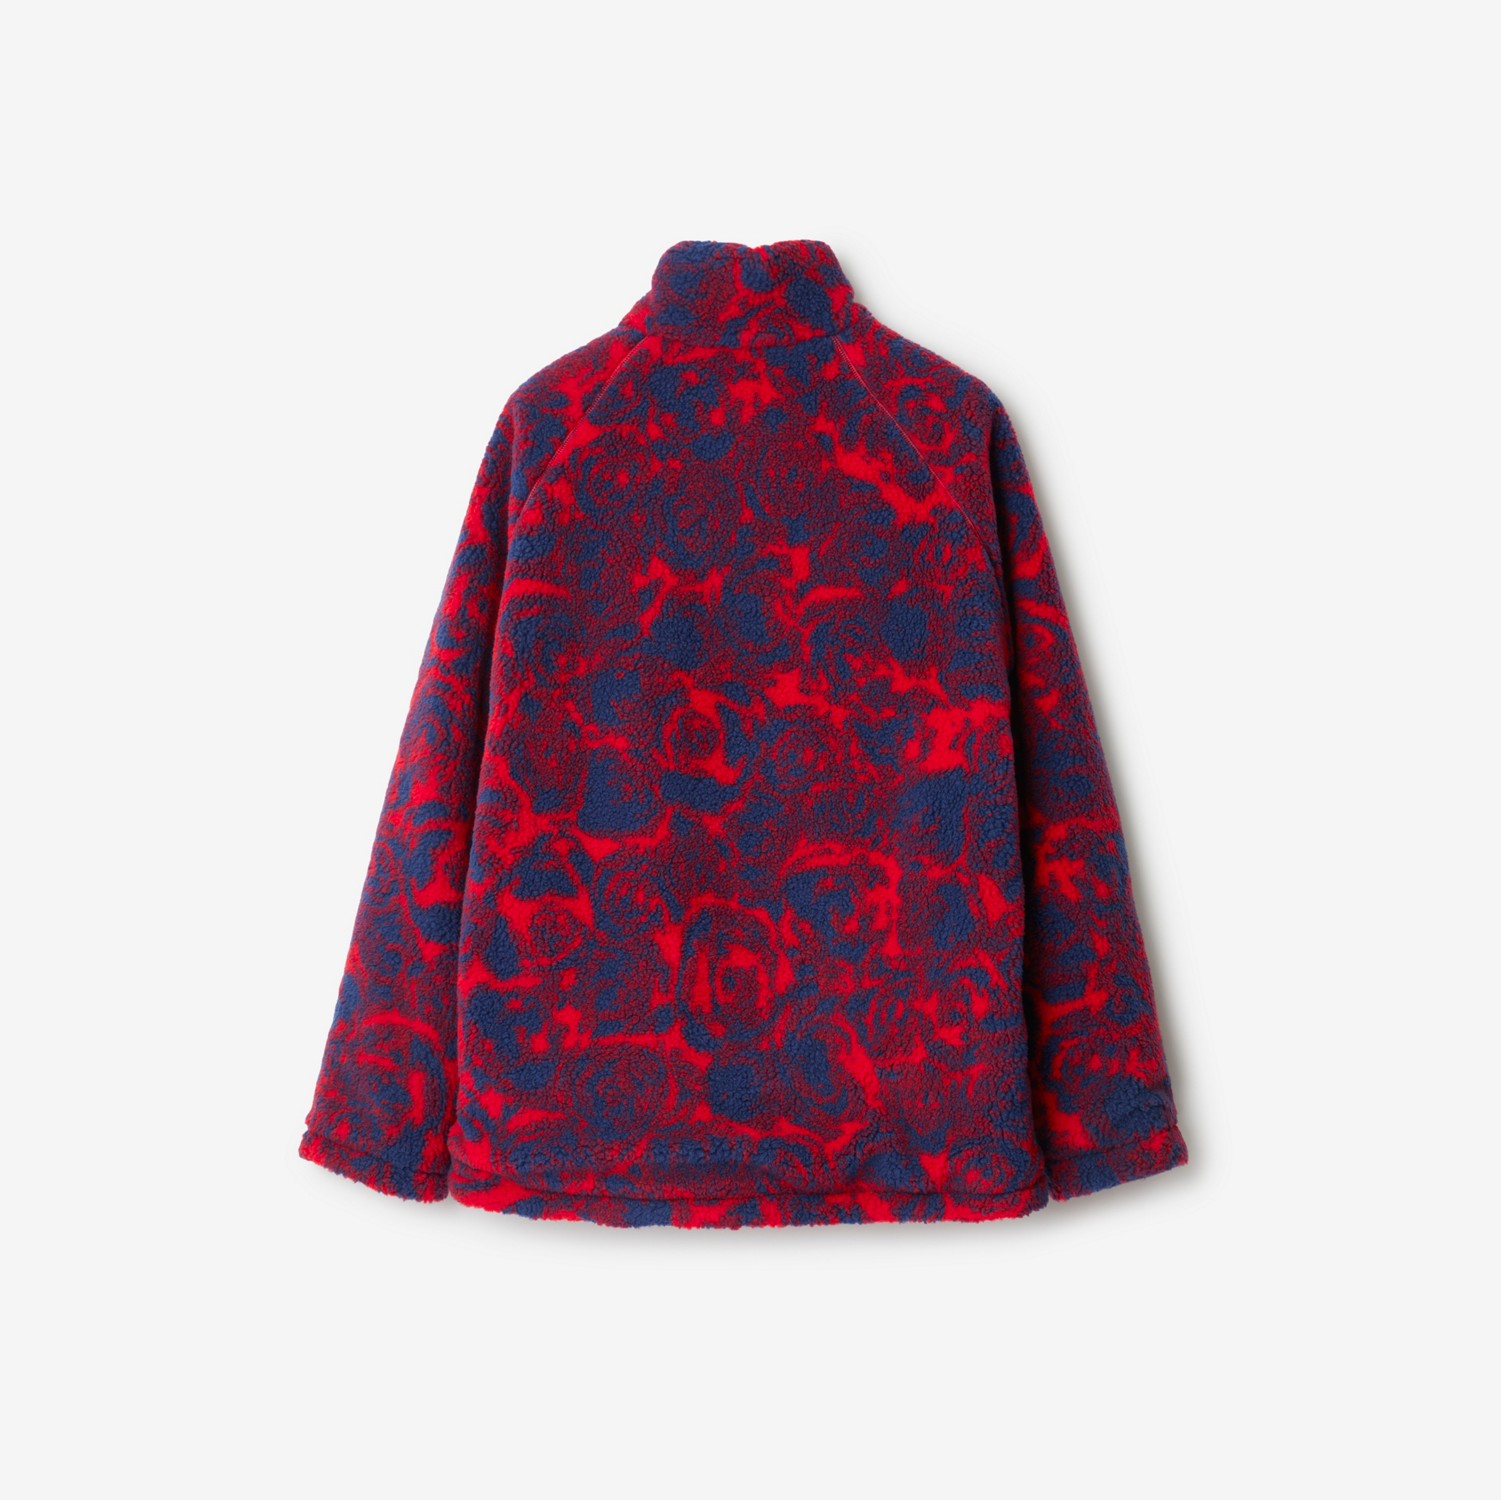 Reversible Rose Fleece Jacket